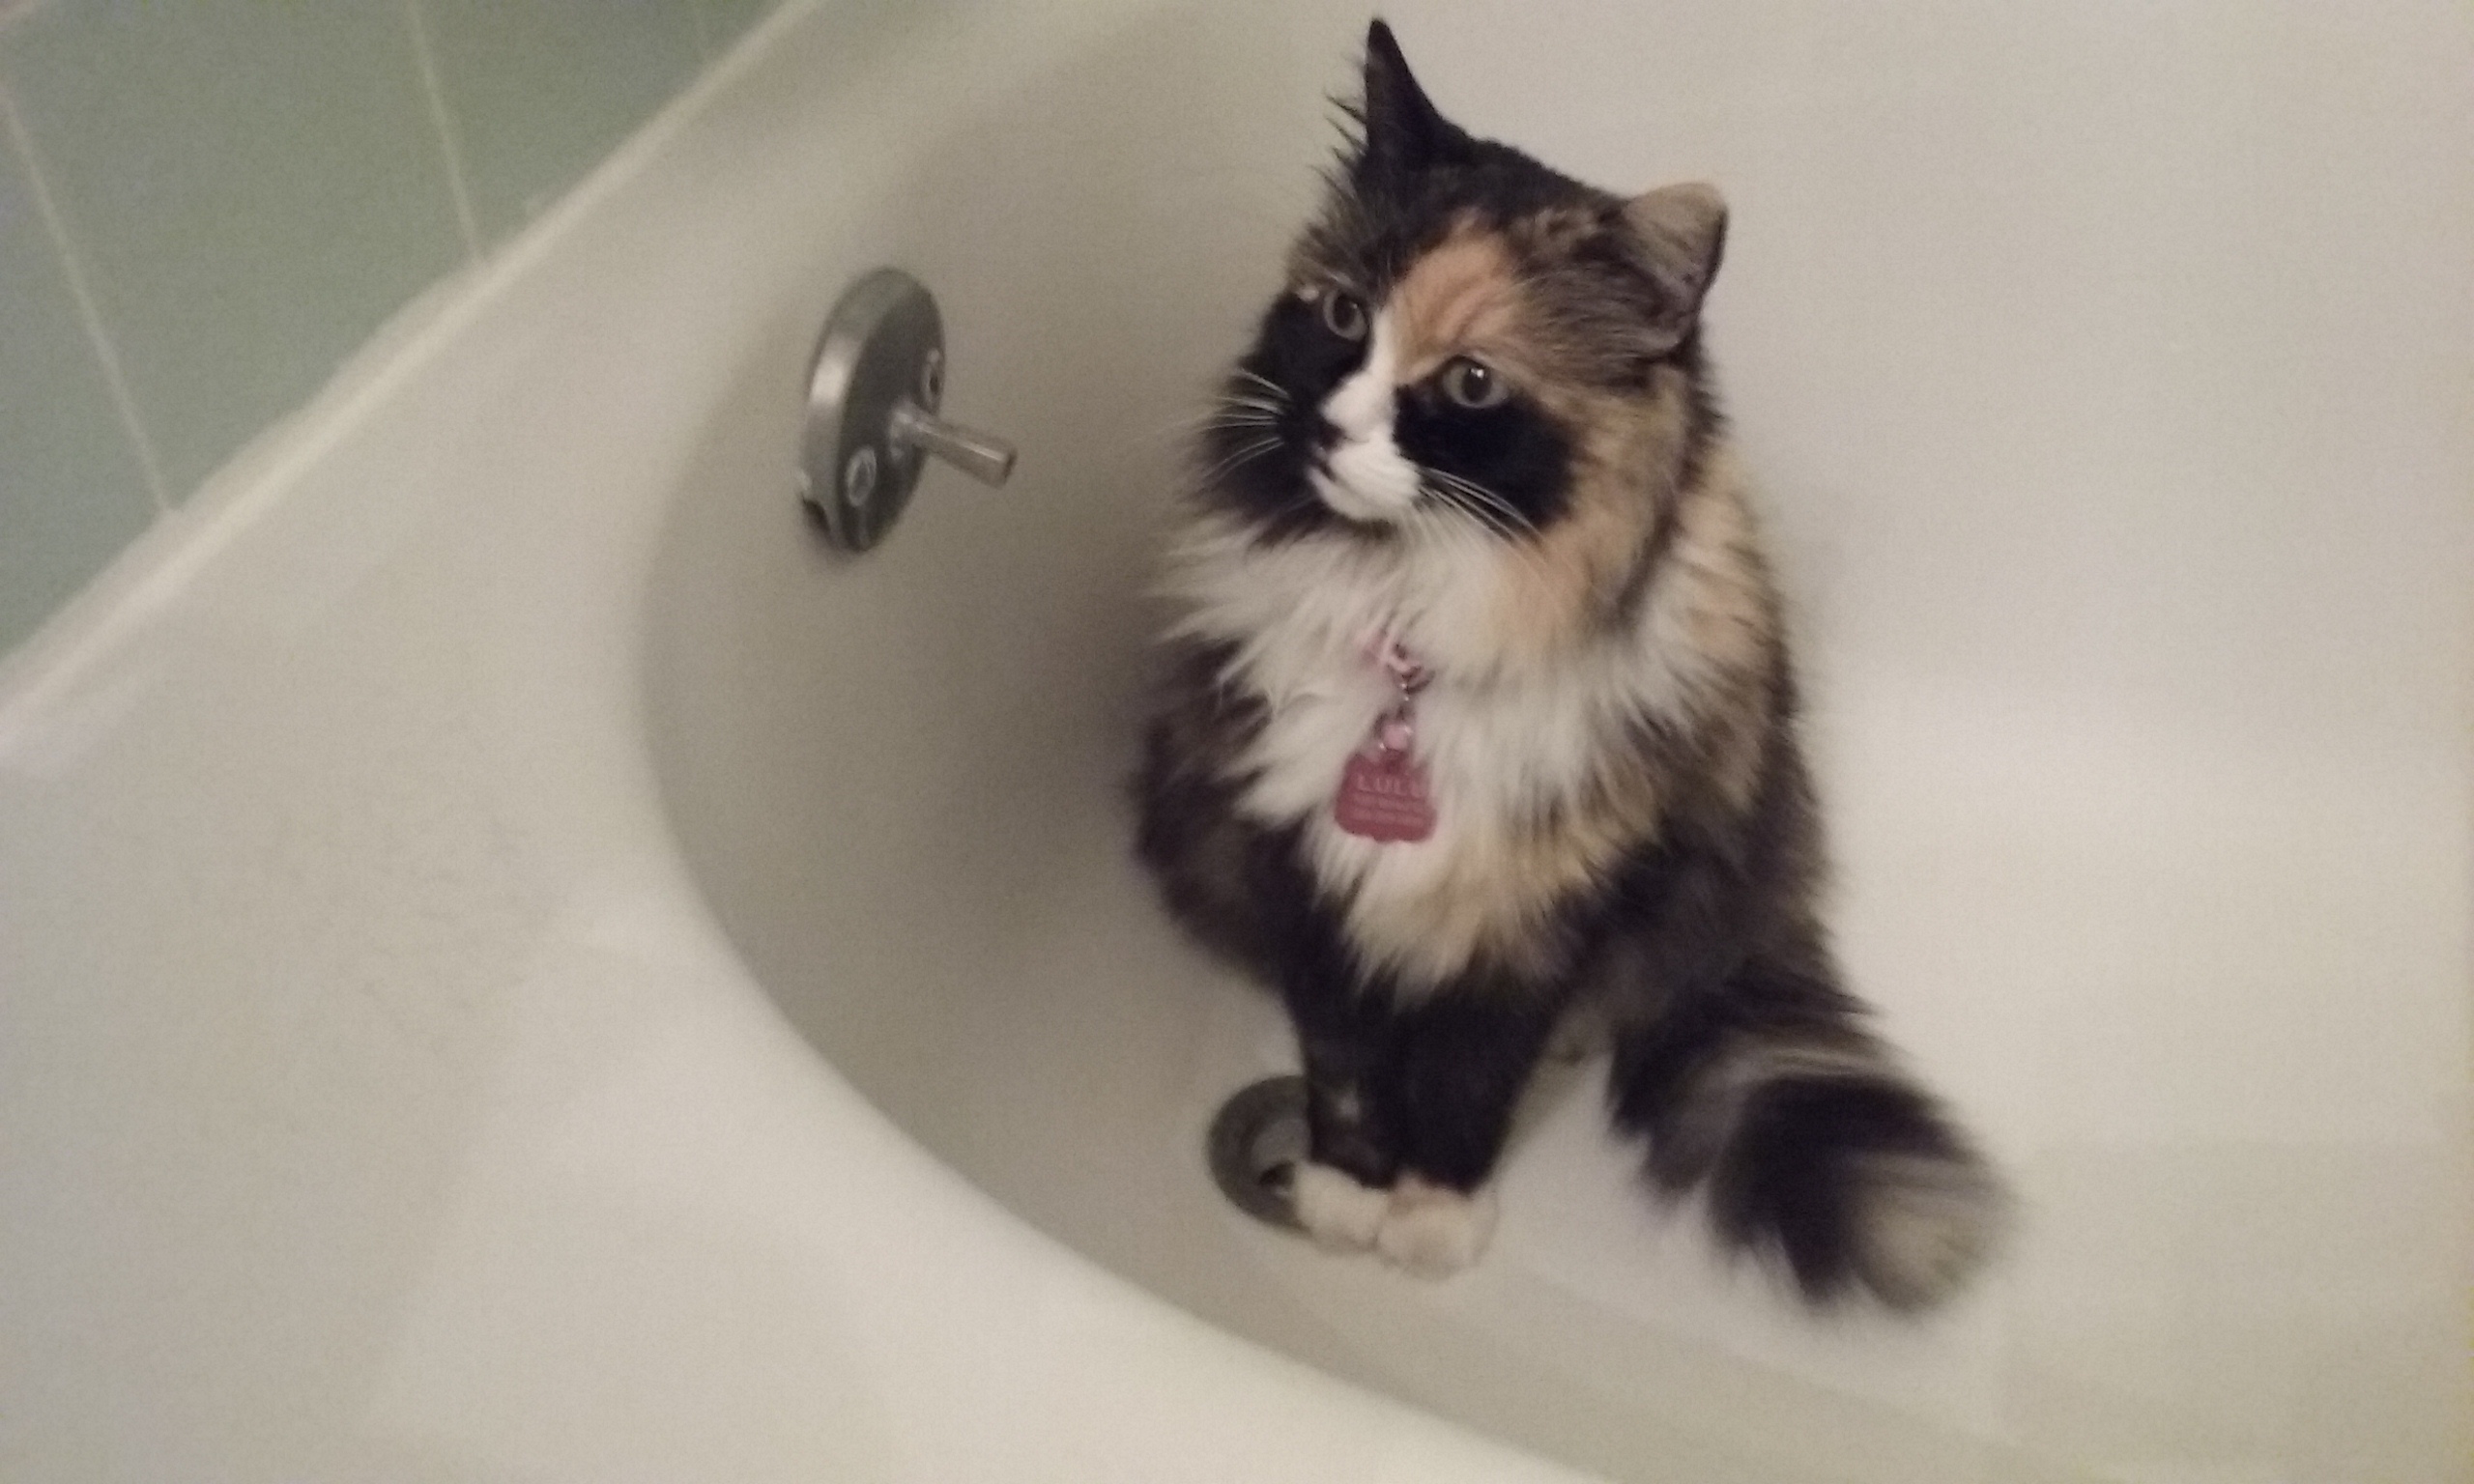 Wanna join me for a bath?